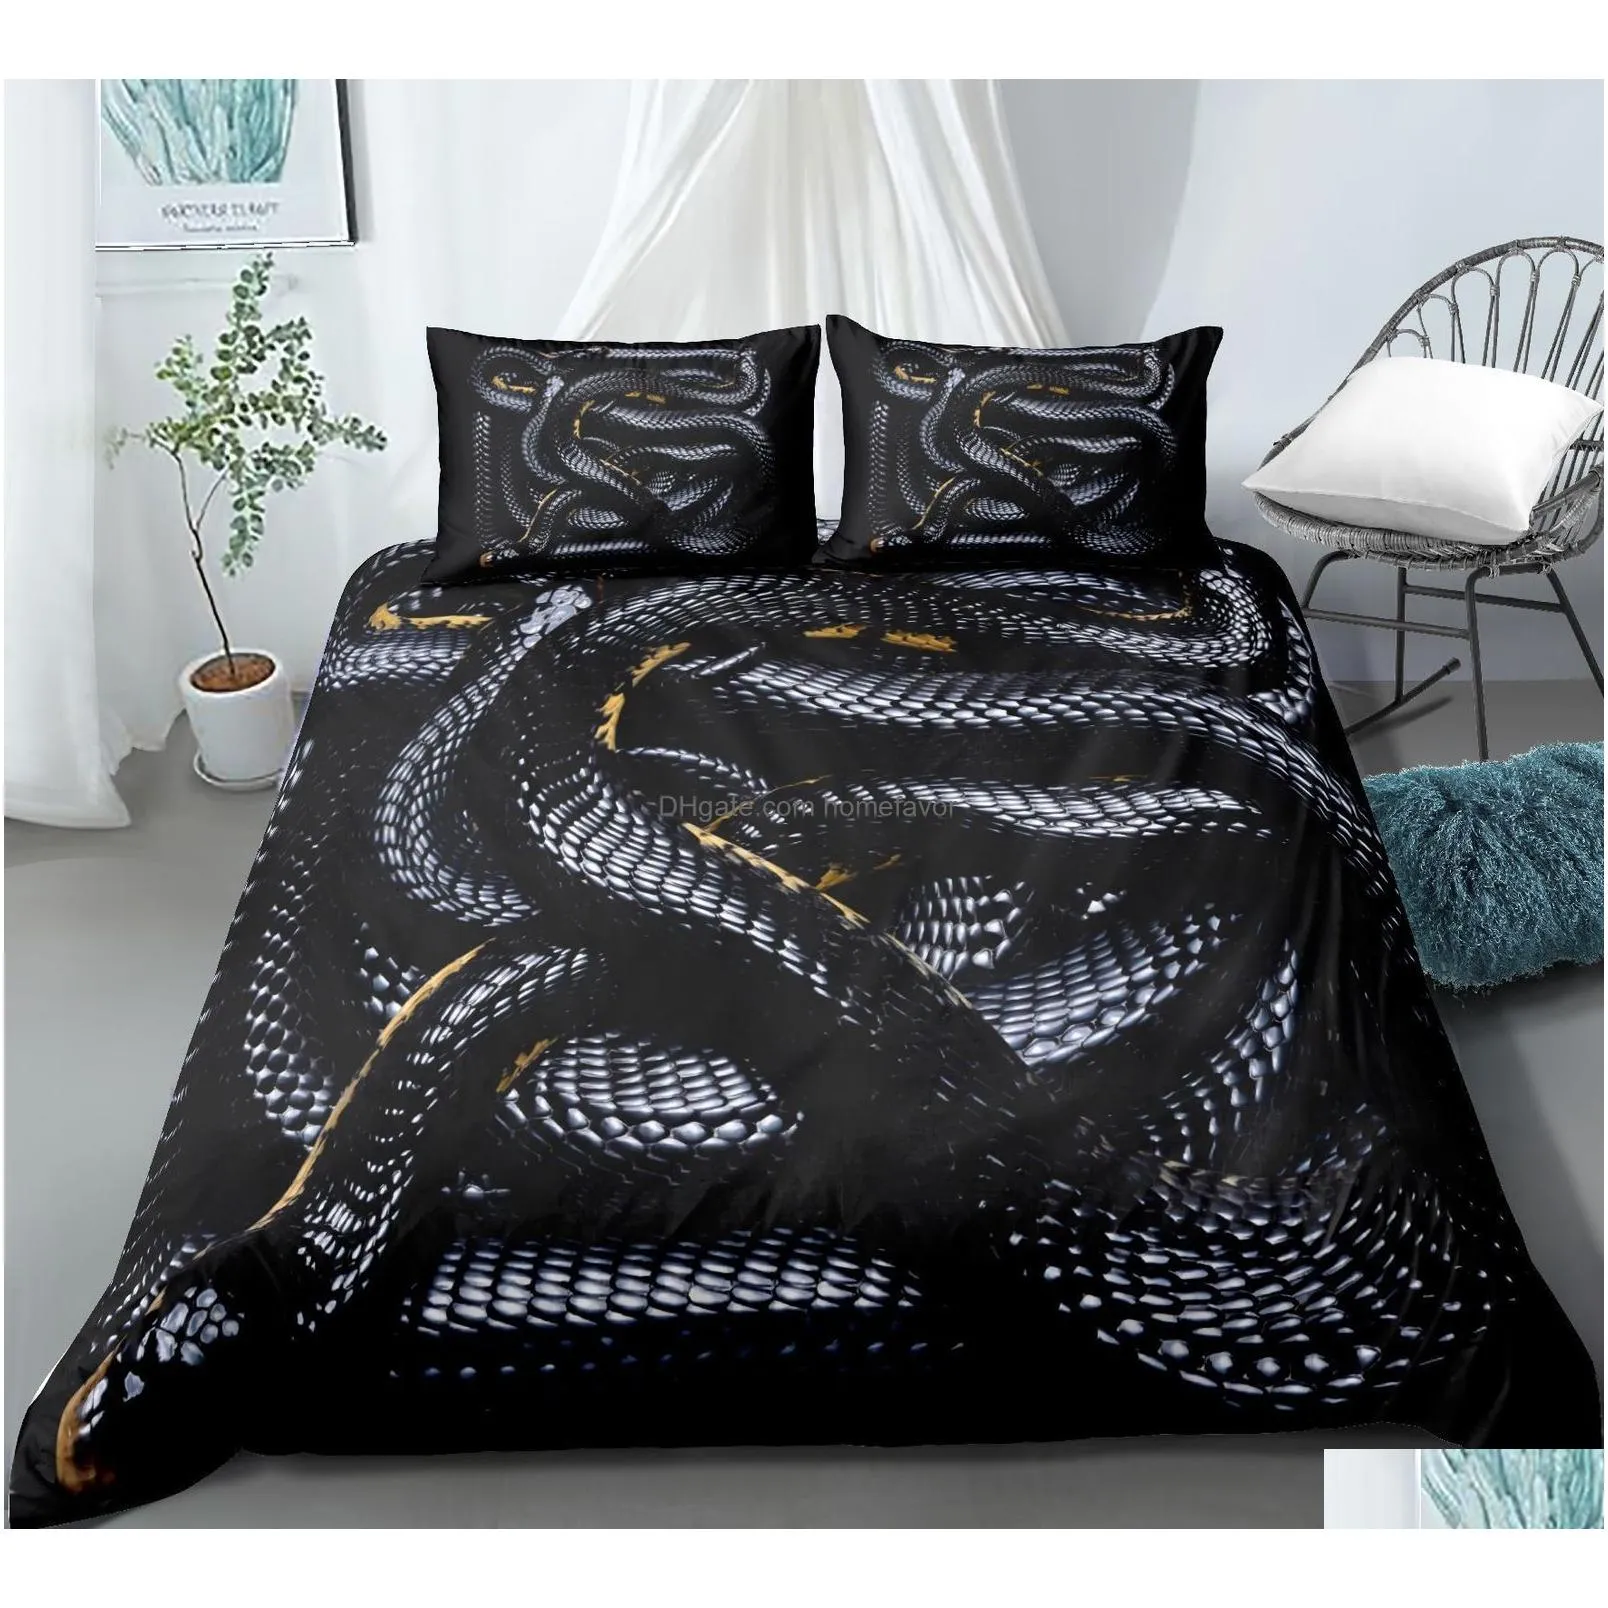 bedding sets 3d snake style bedding set for bedroom soft duvet cover bedspreads for bed linen comefortable quilt and pillowcase 221208